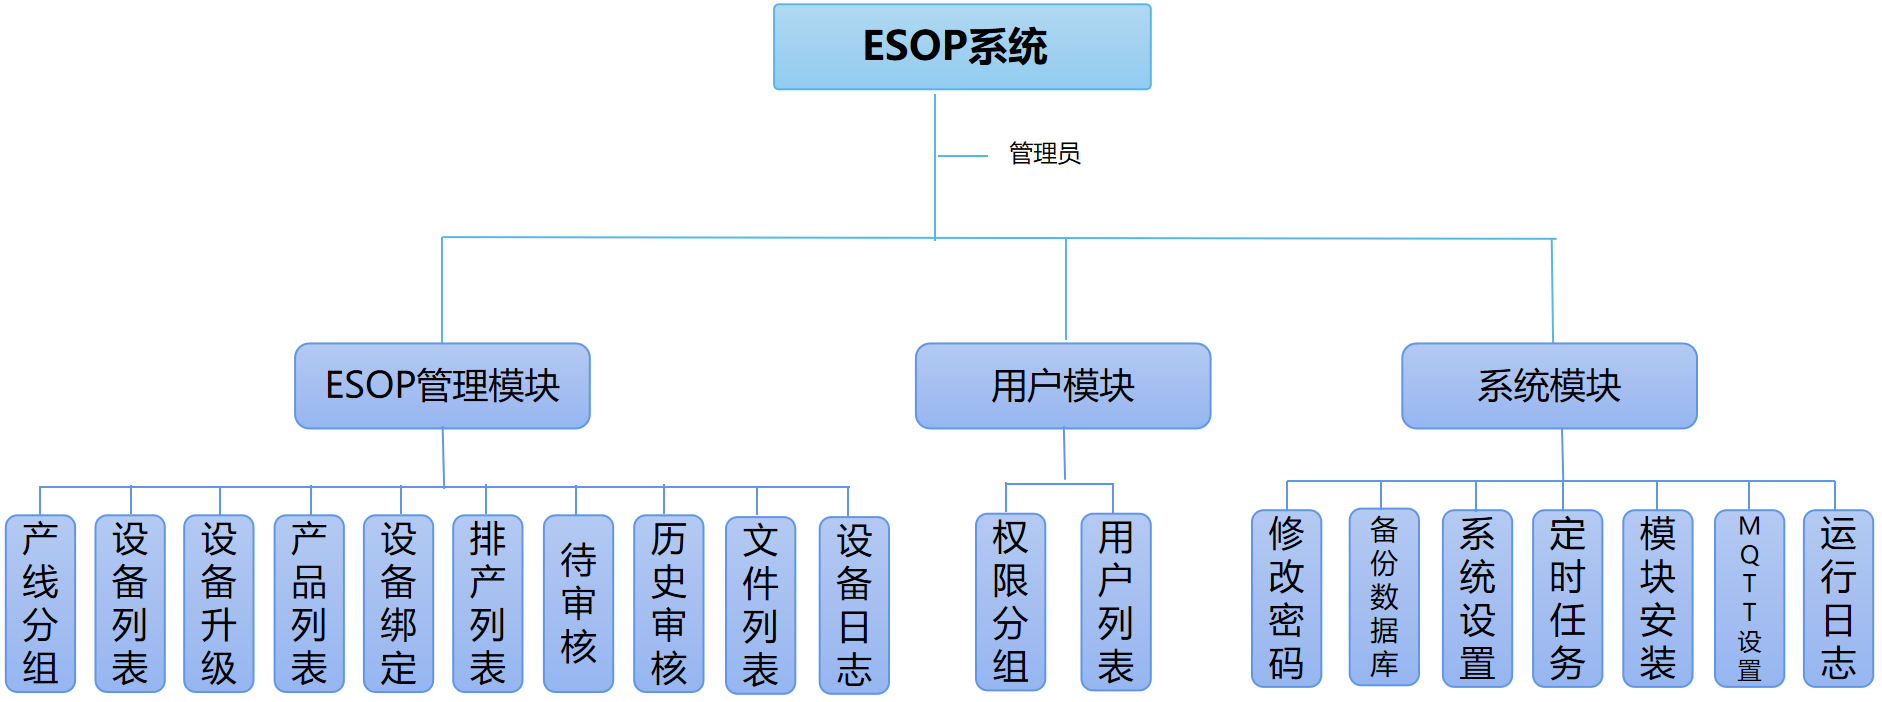 ESOP软件部署